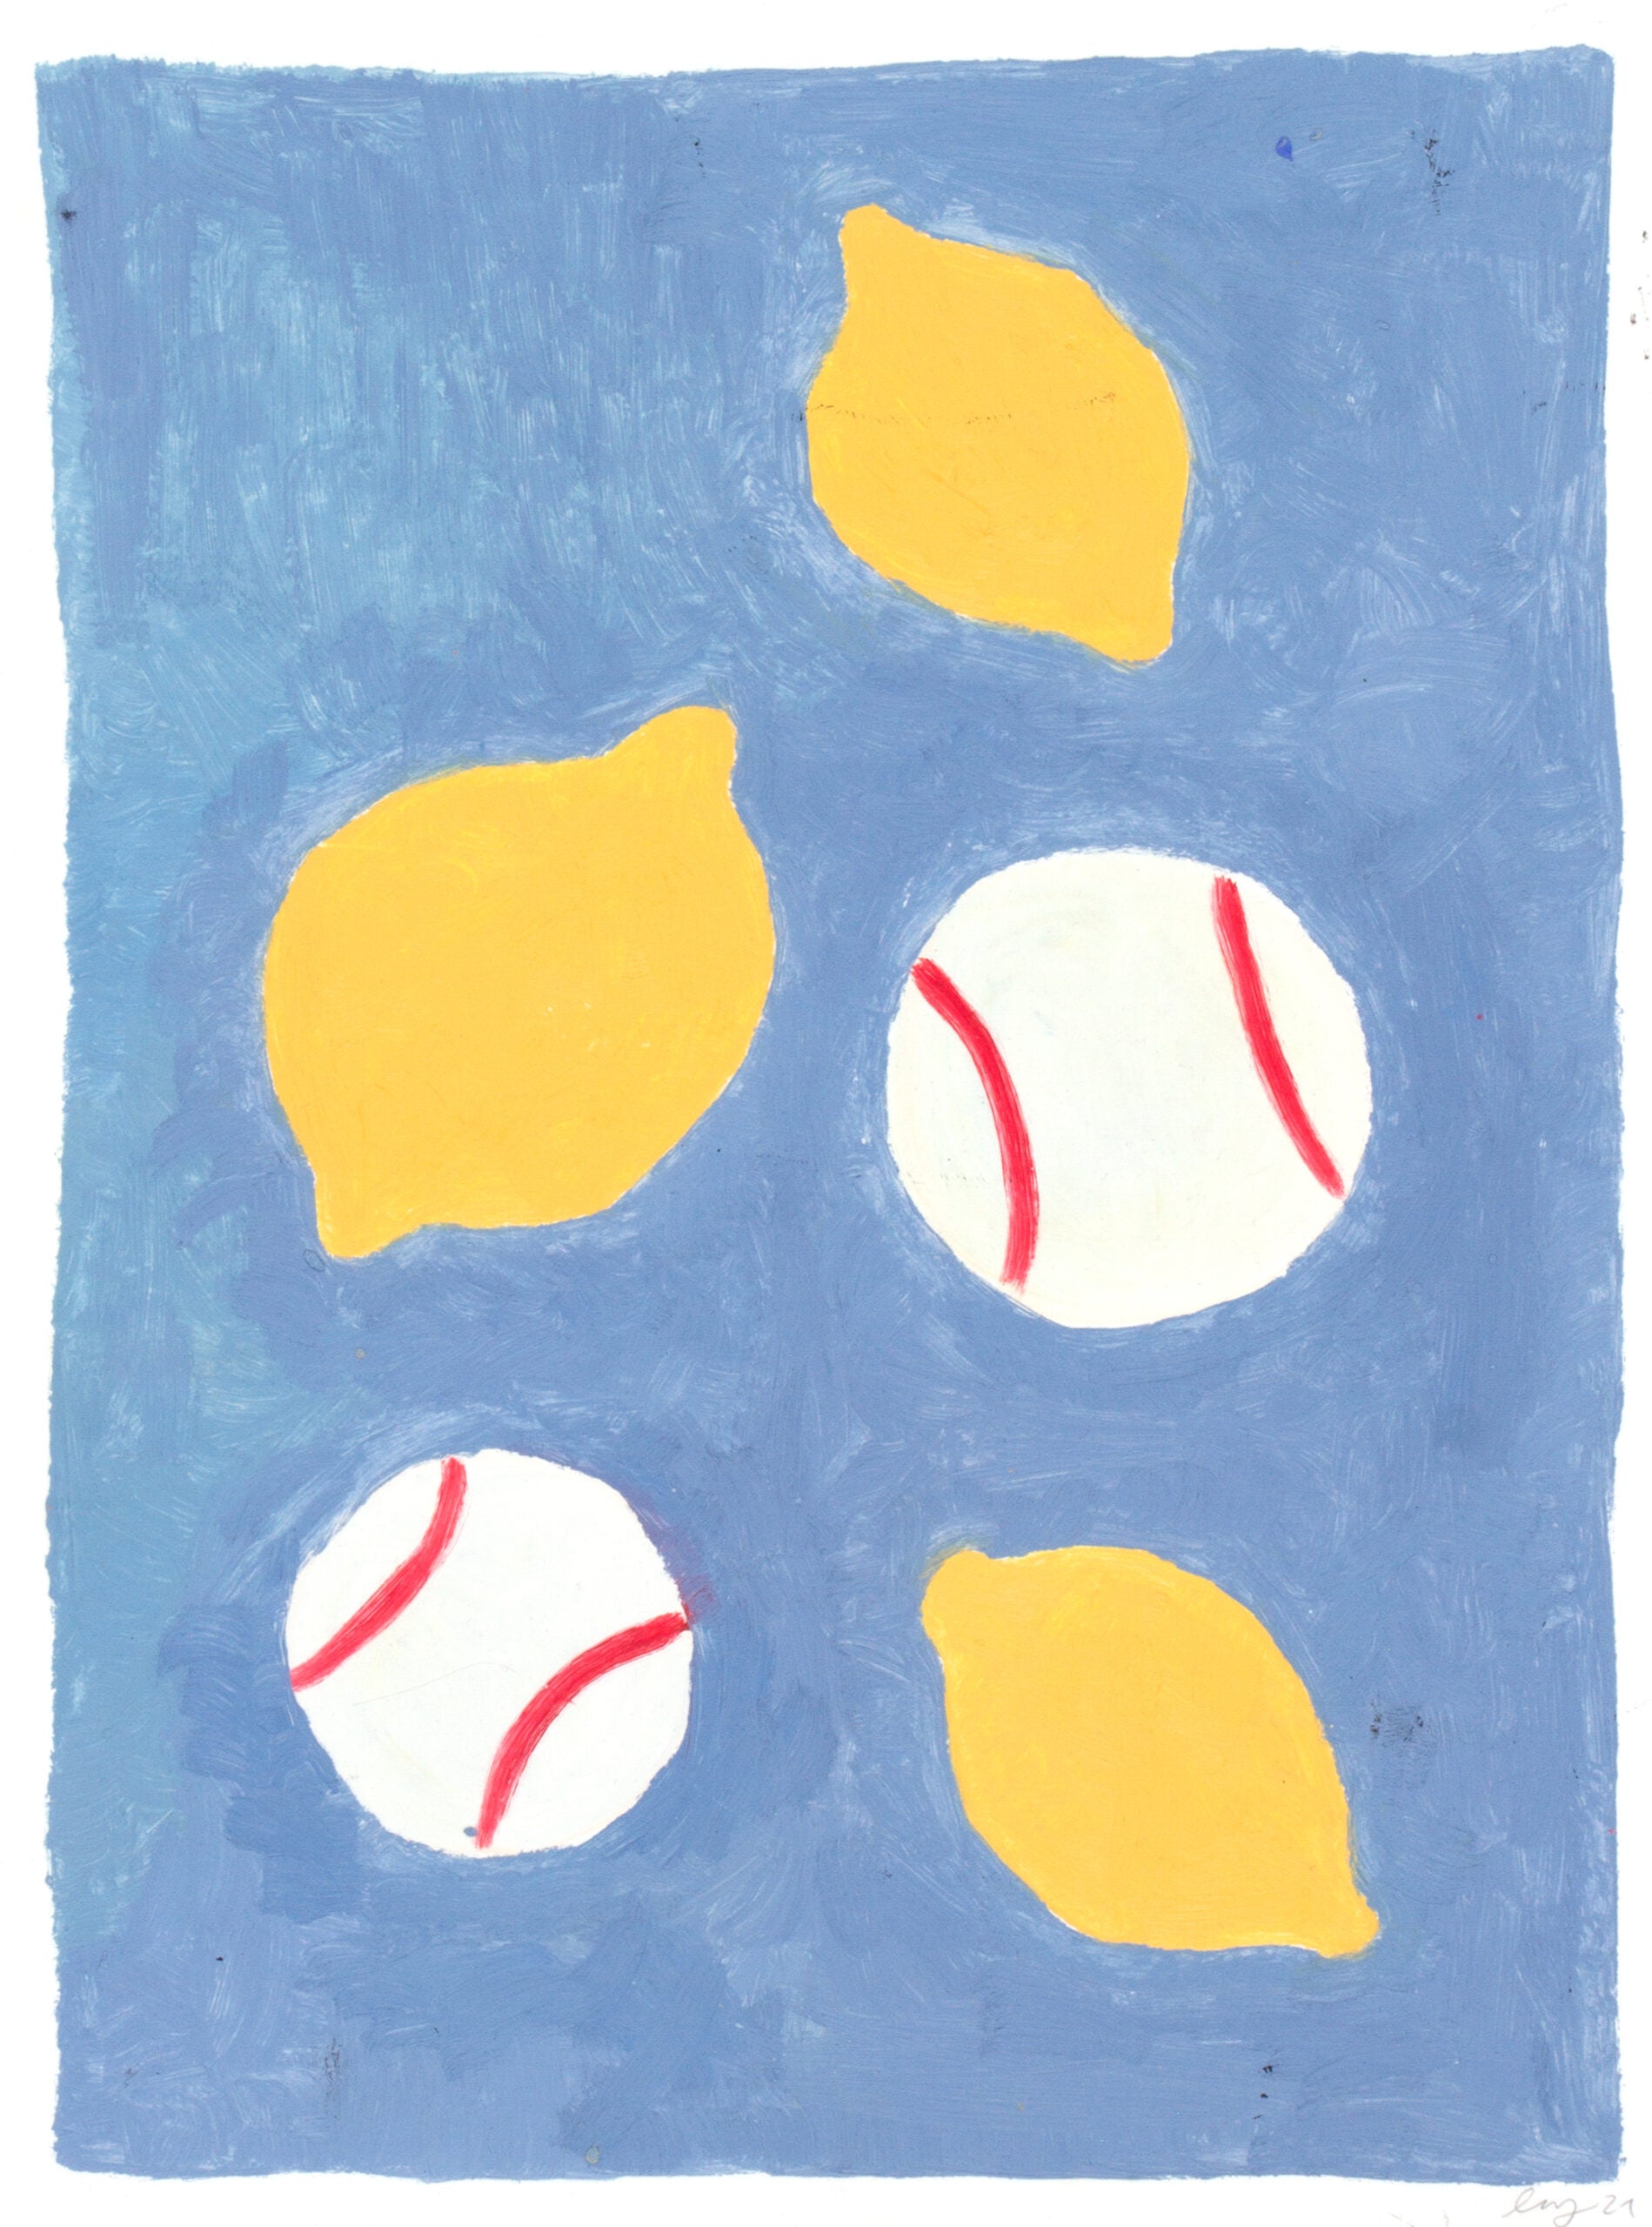 Lemonandbaseball.jpg